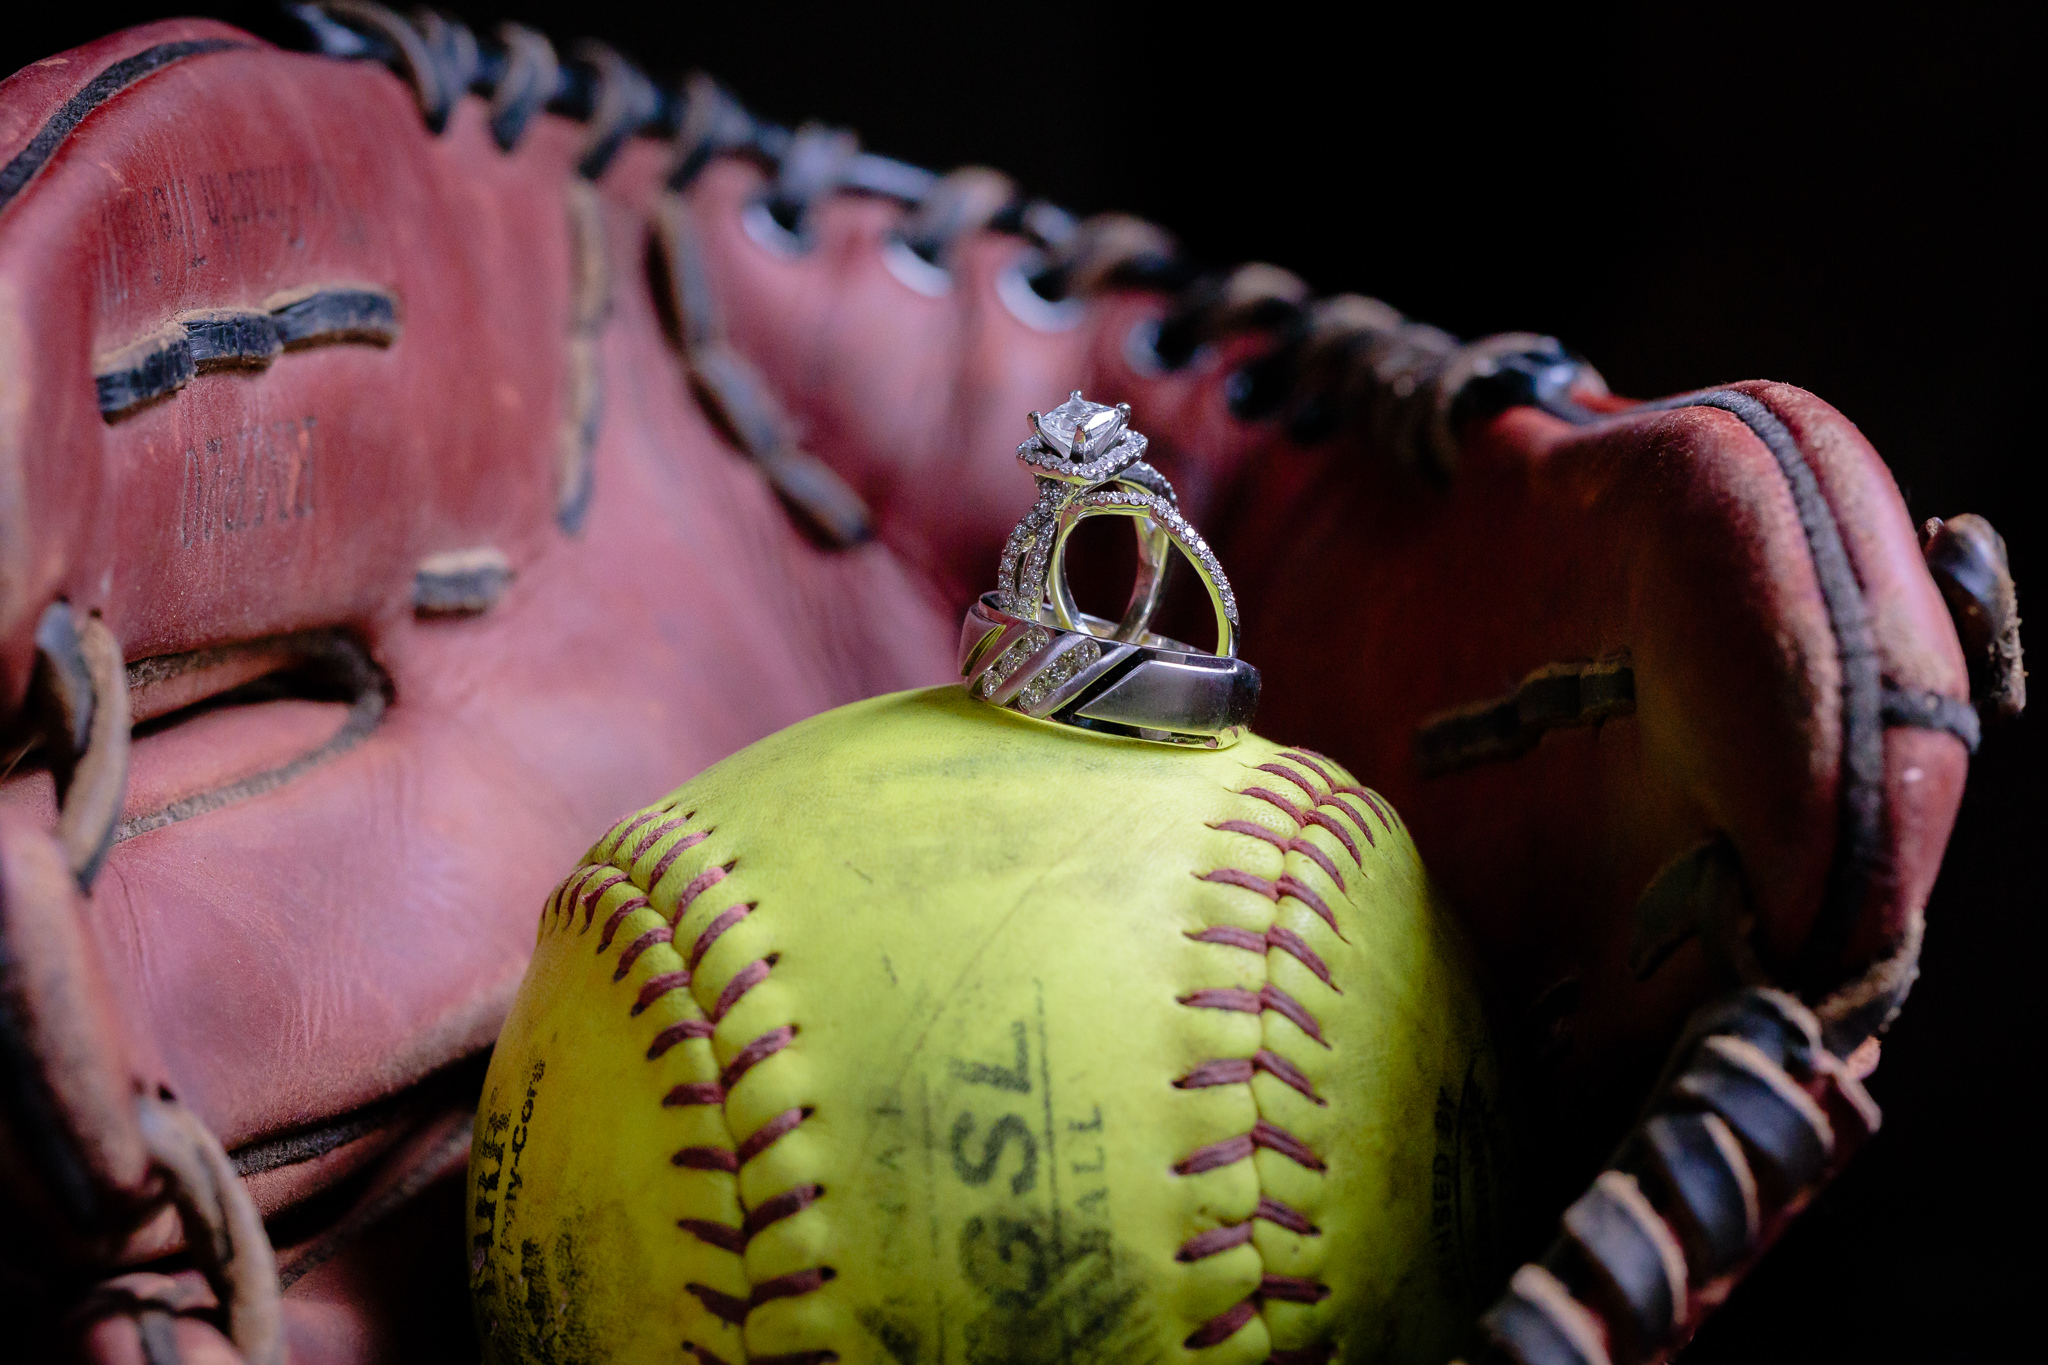 Wedding bands rest on a yellow softball inside a glove